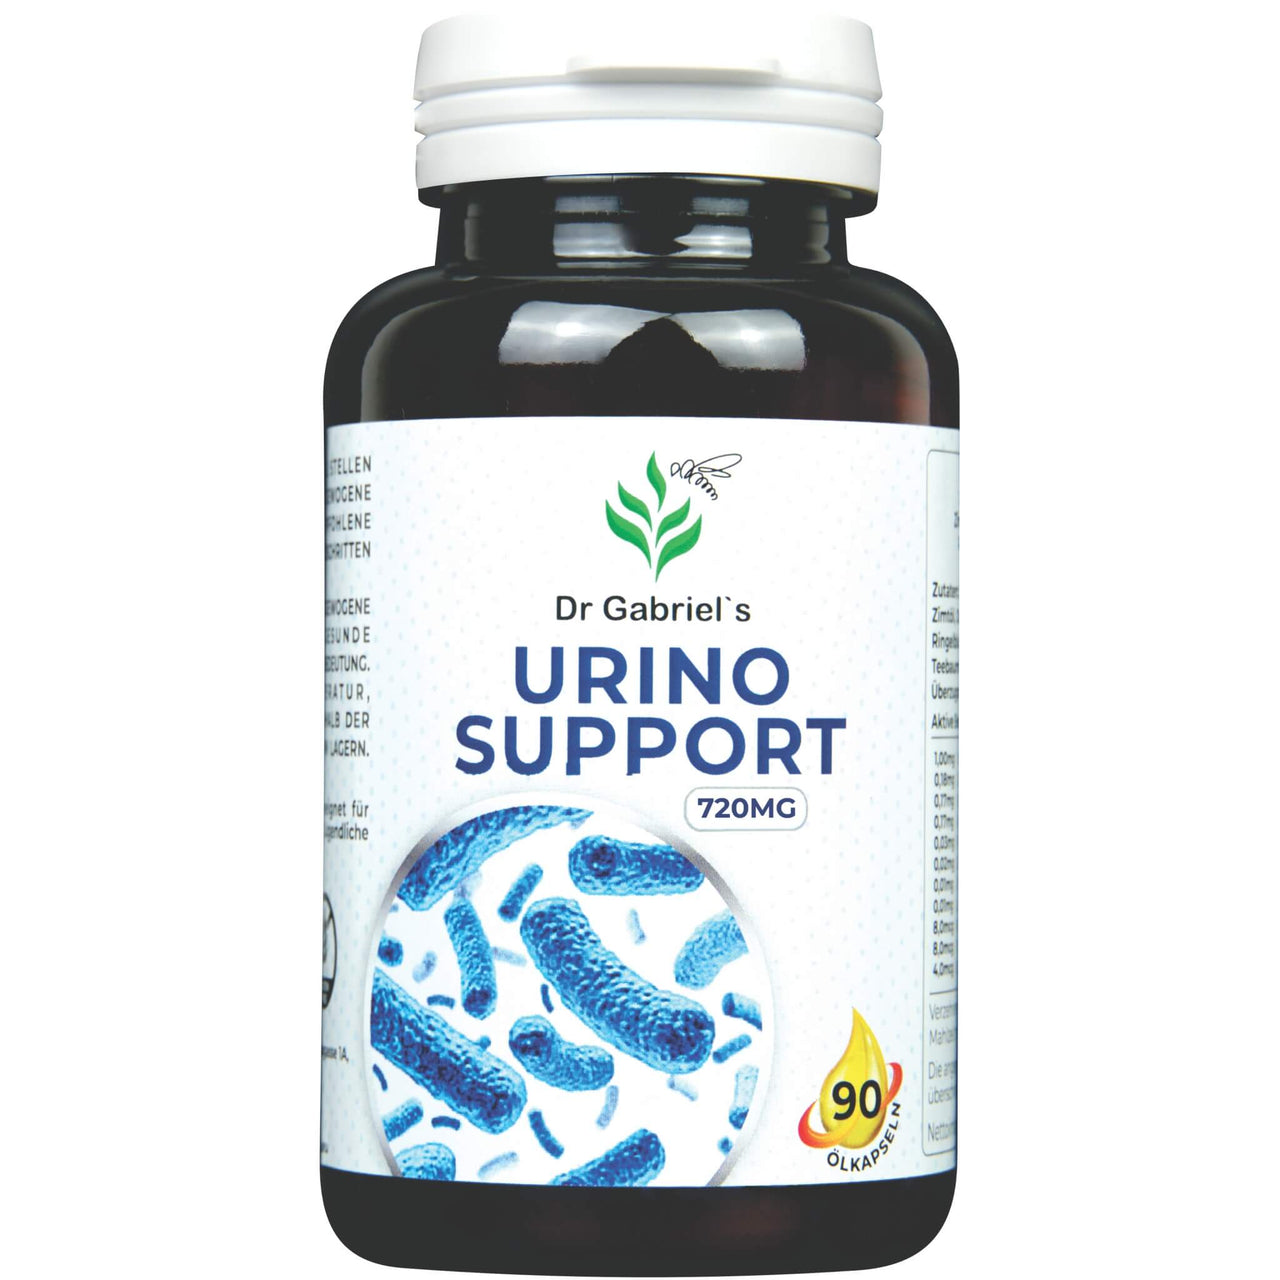 Dr Gabriel's Urino Support